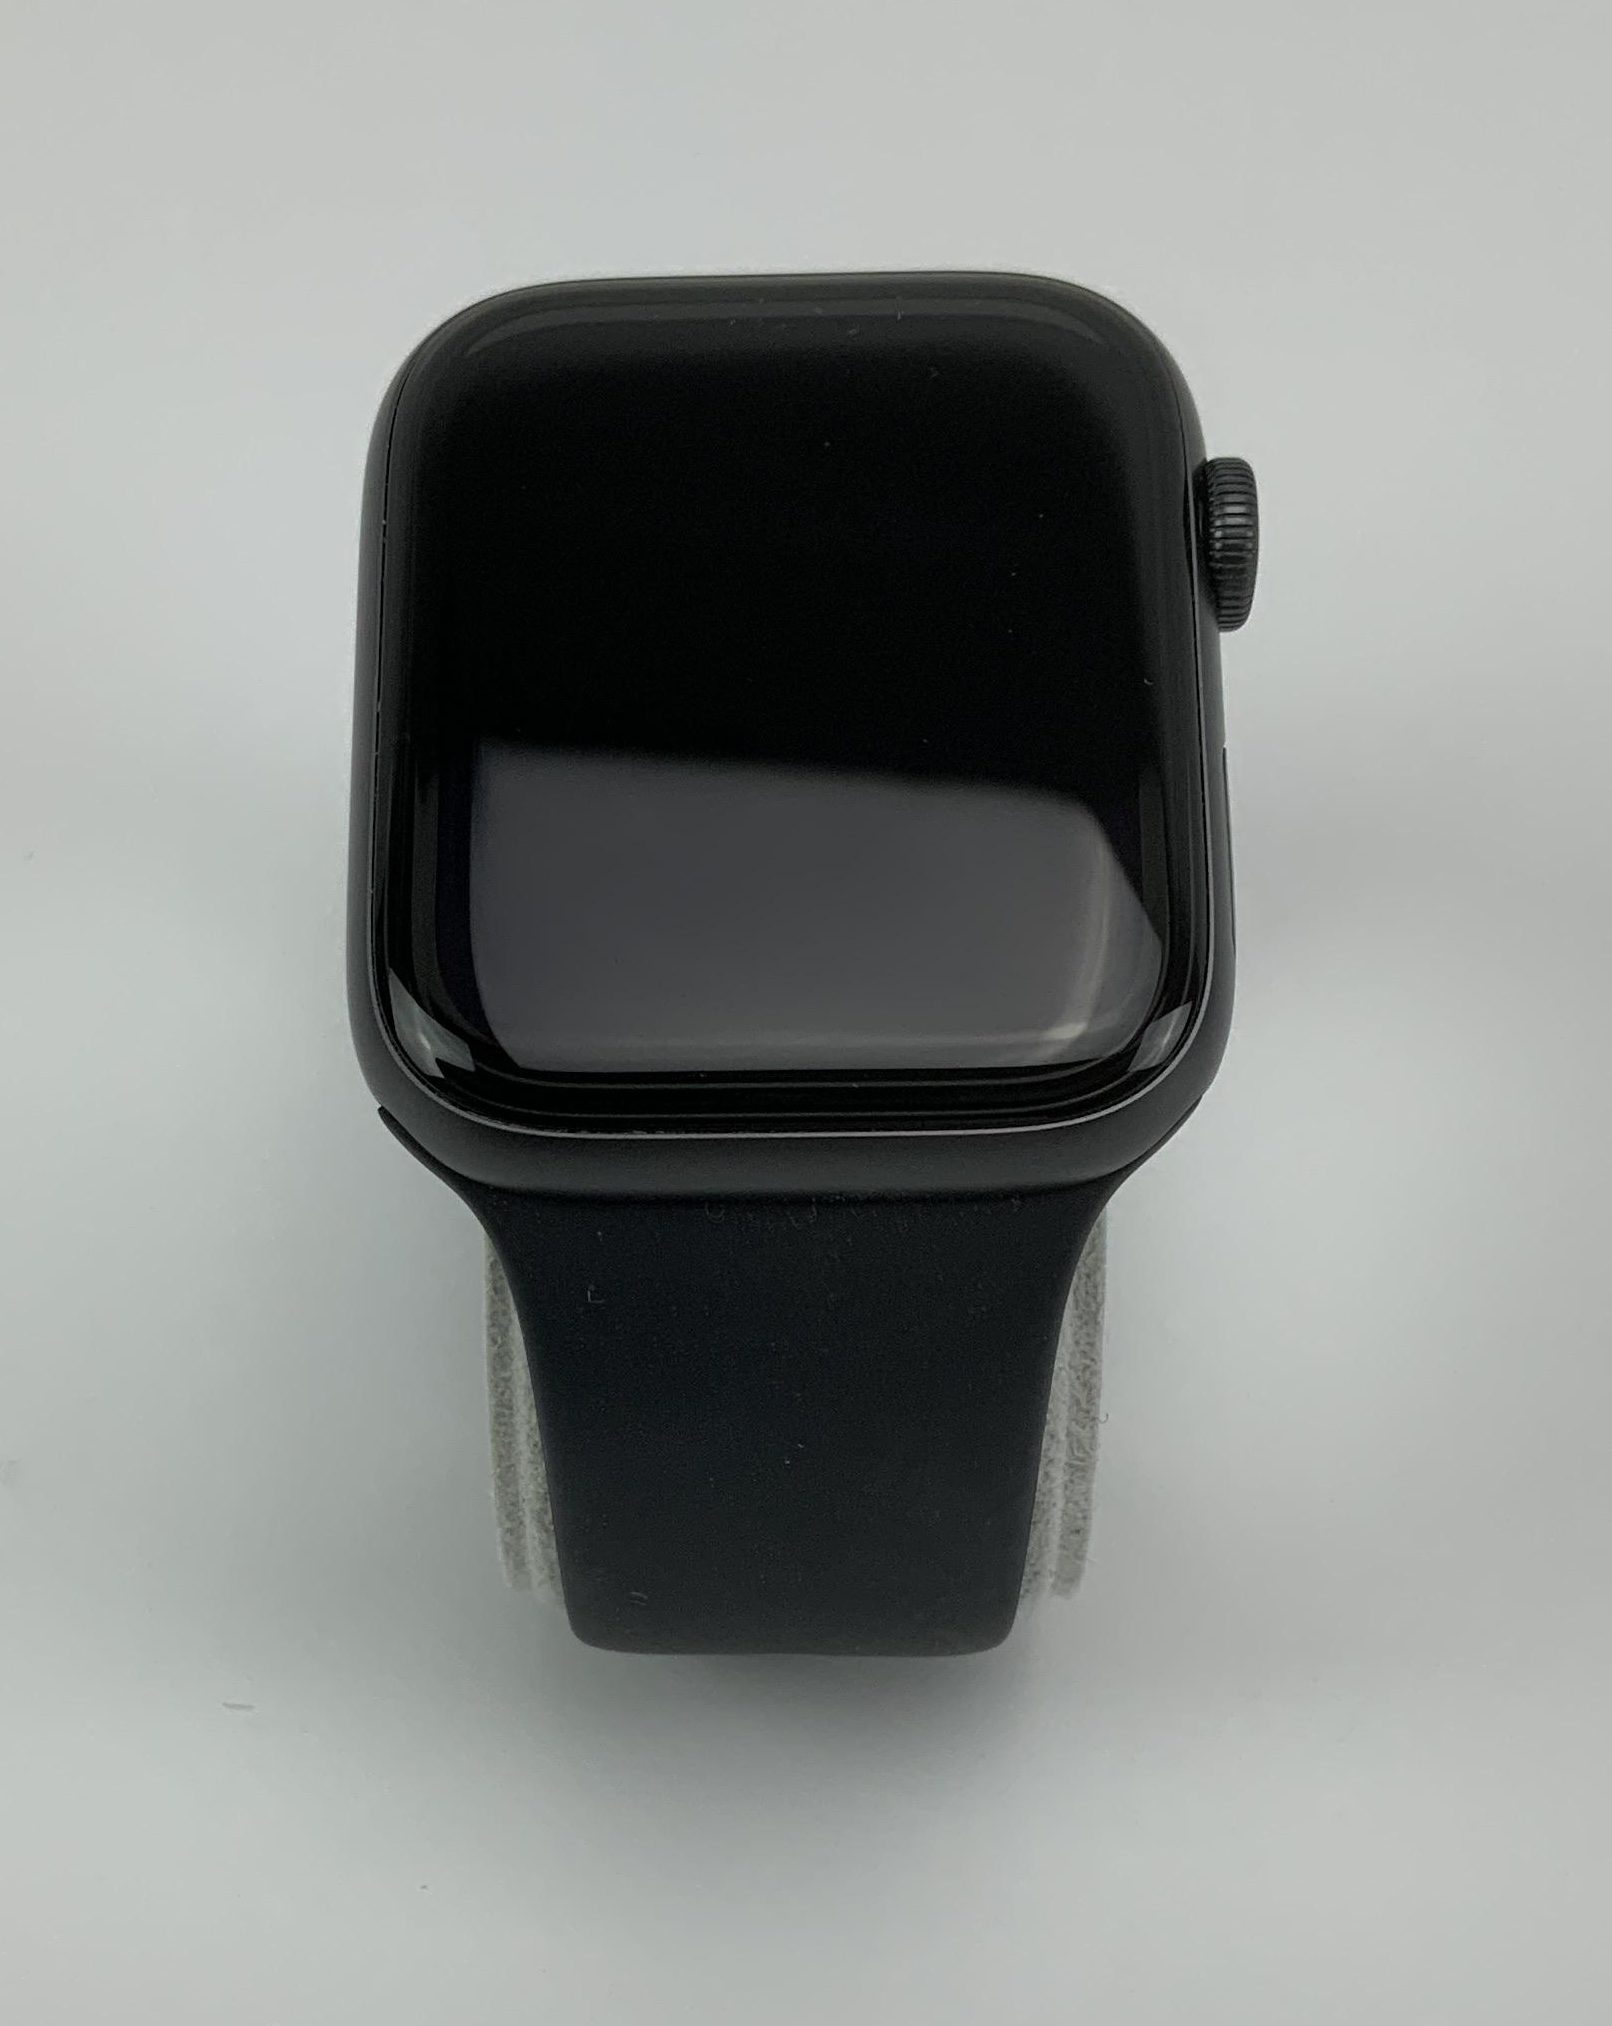 Watch Series 5 Aluminum Cellular (44mm), Space Gray, imagen 1